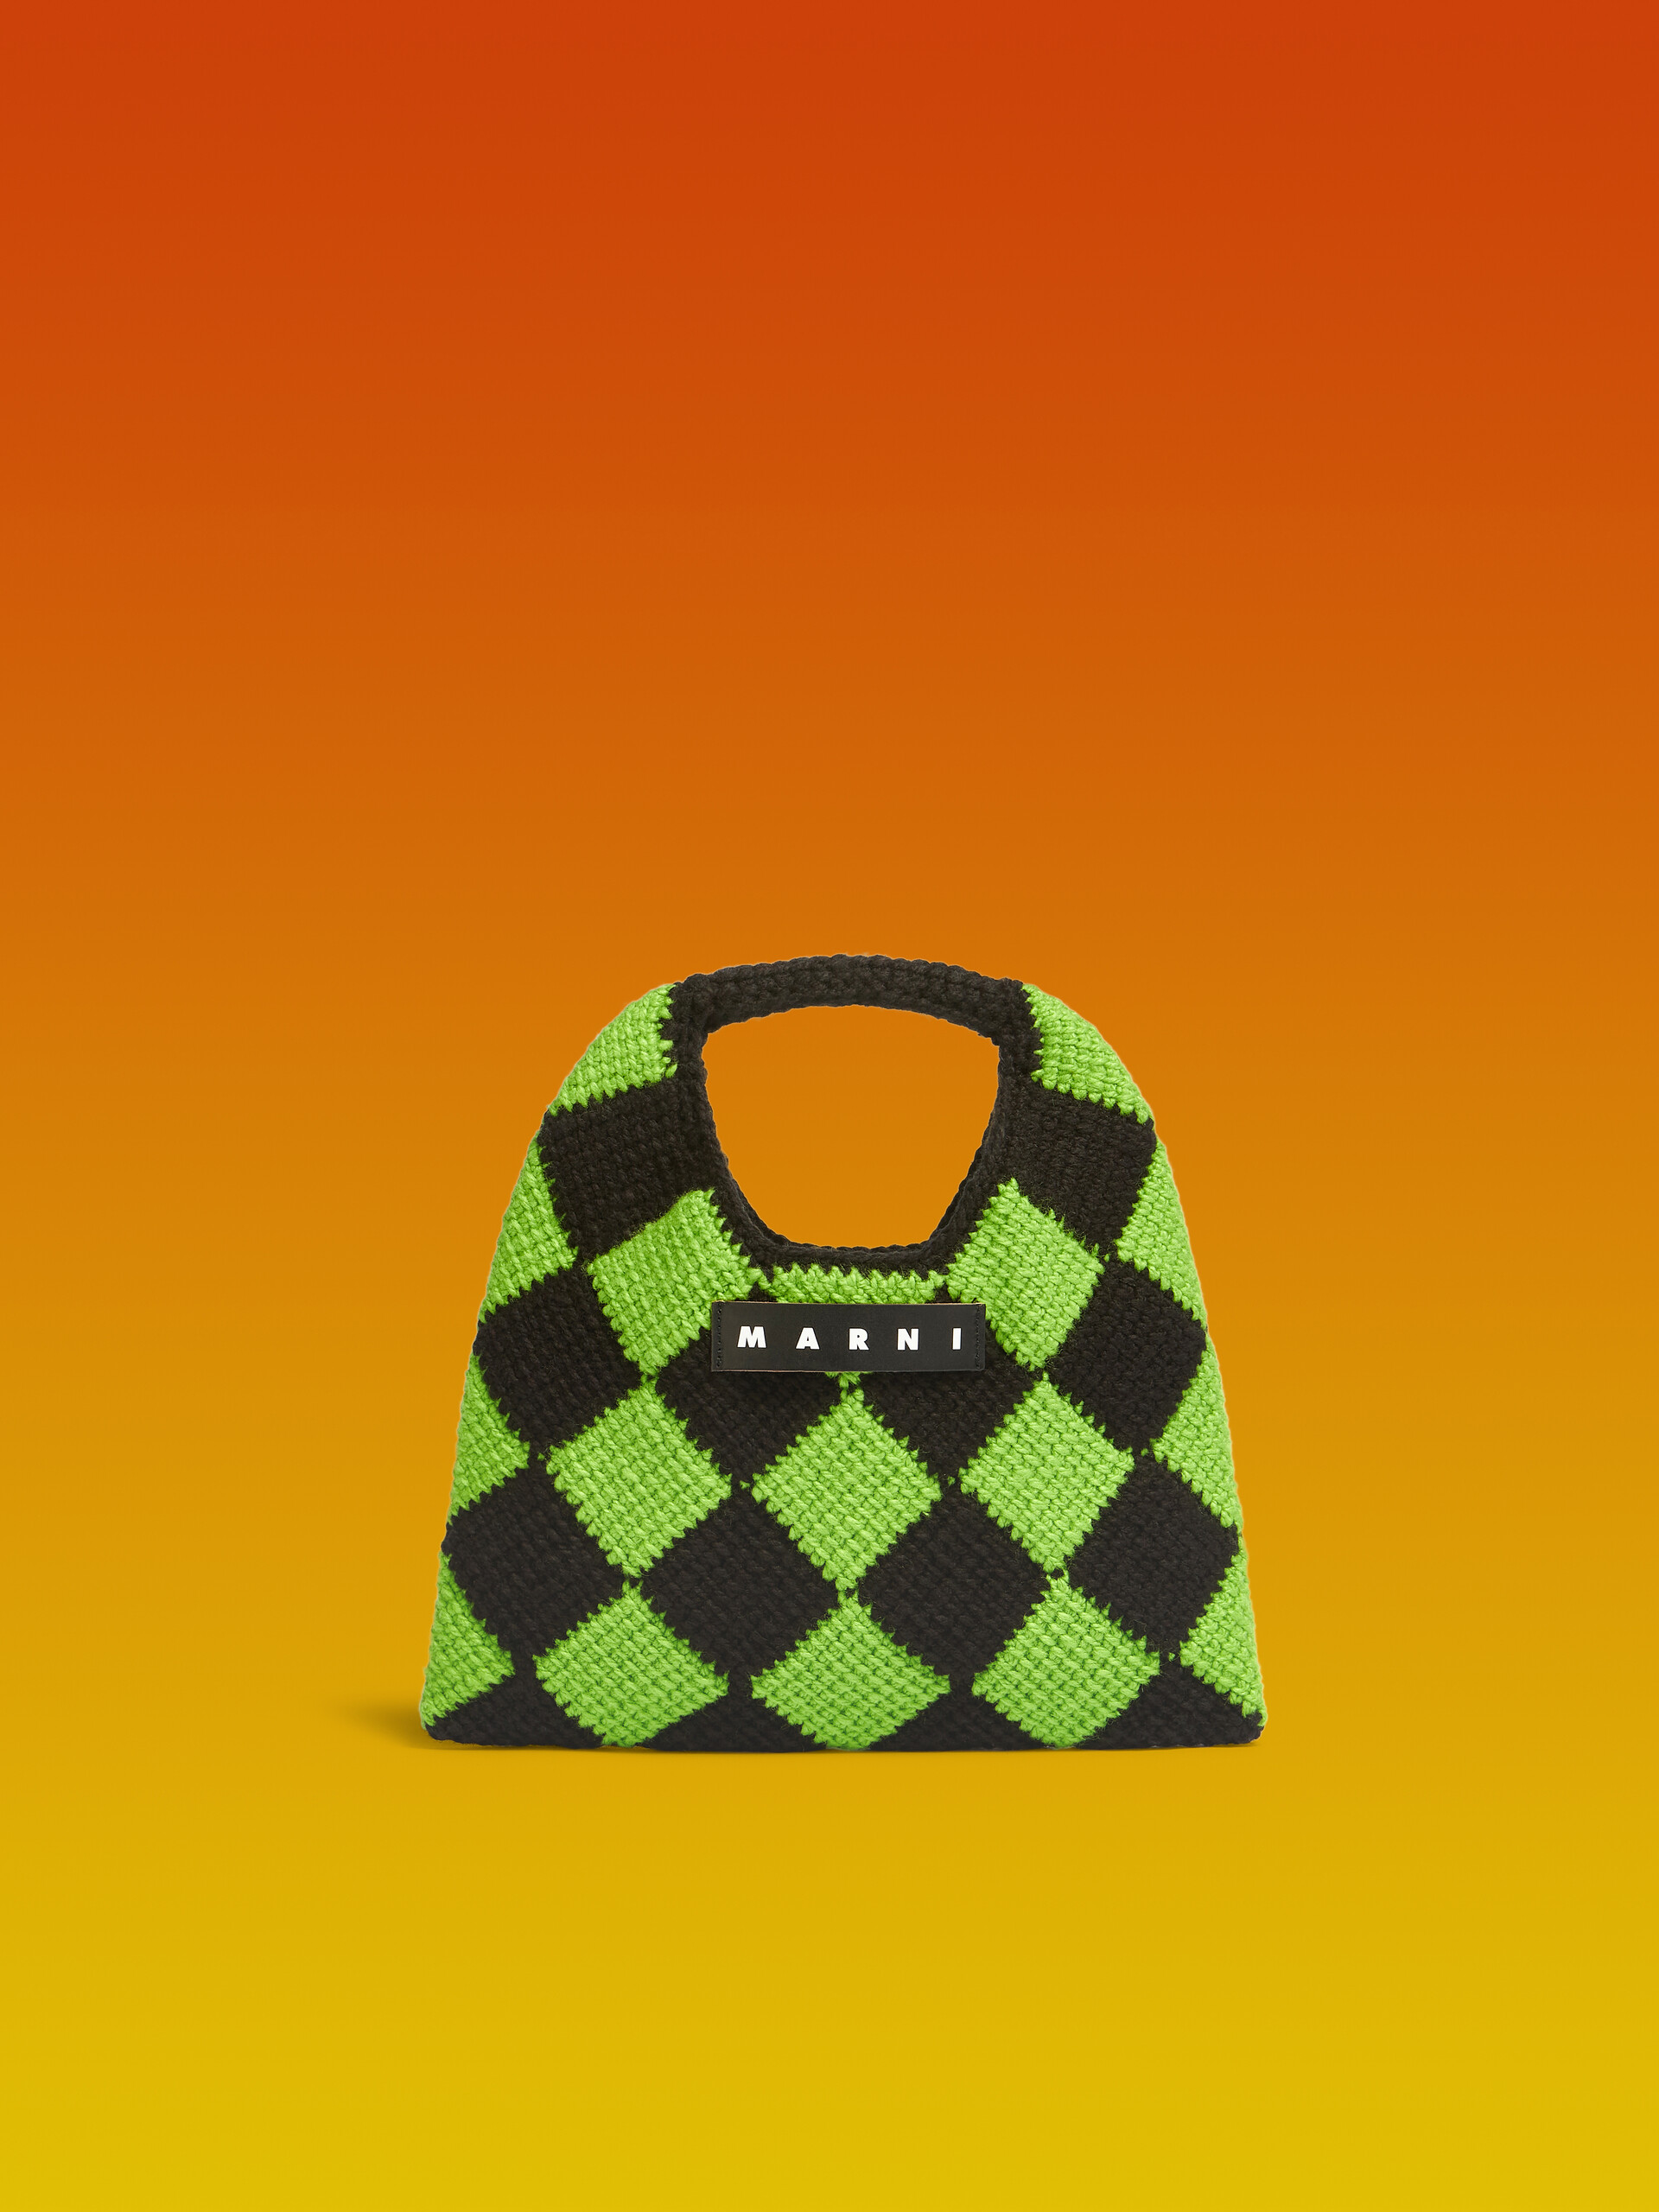 MARNI MARKET DIAMOND small bag in green and black tech wool - Bags - Image 1